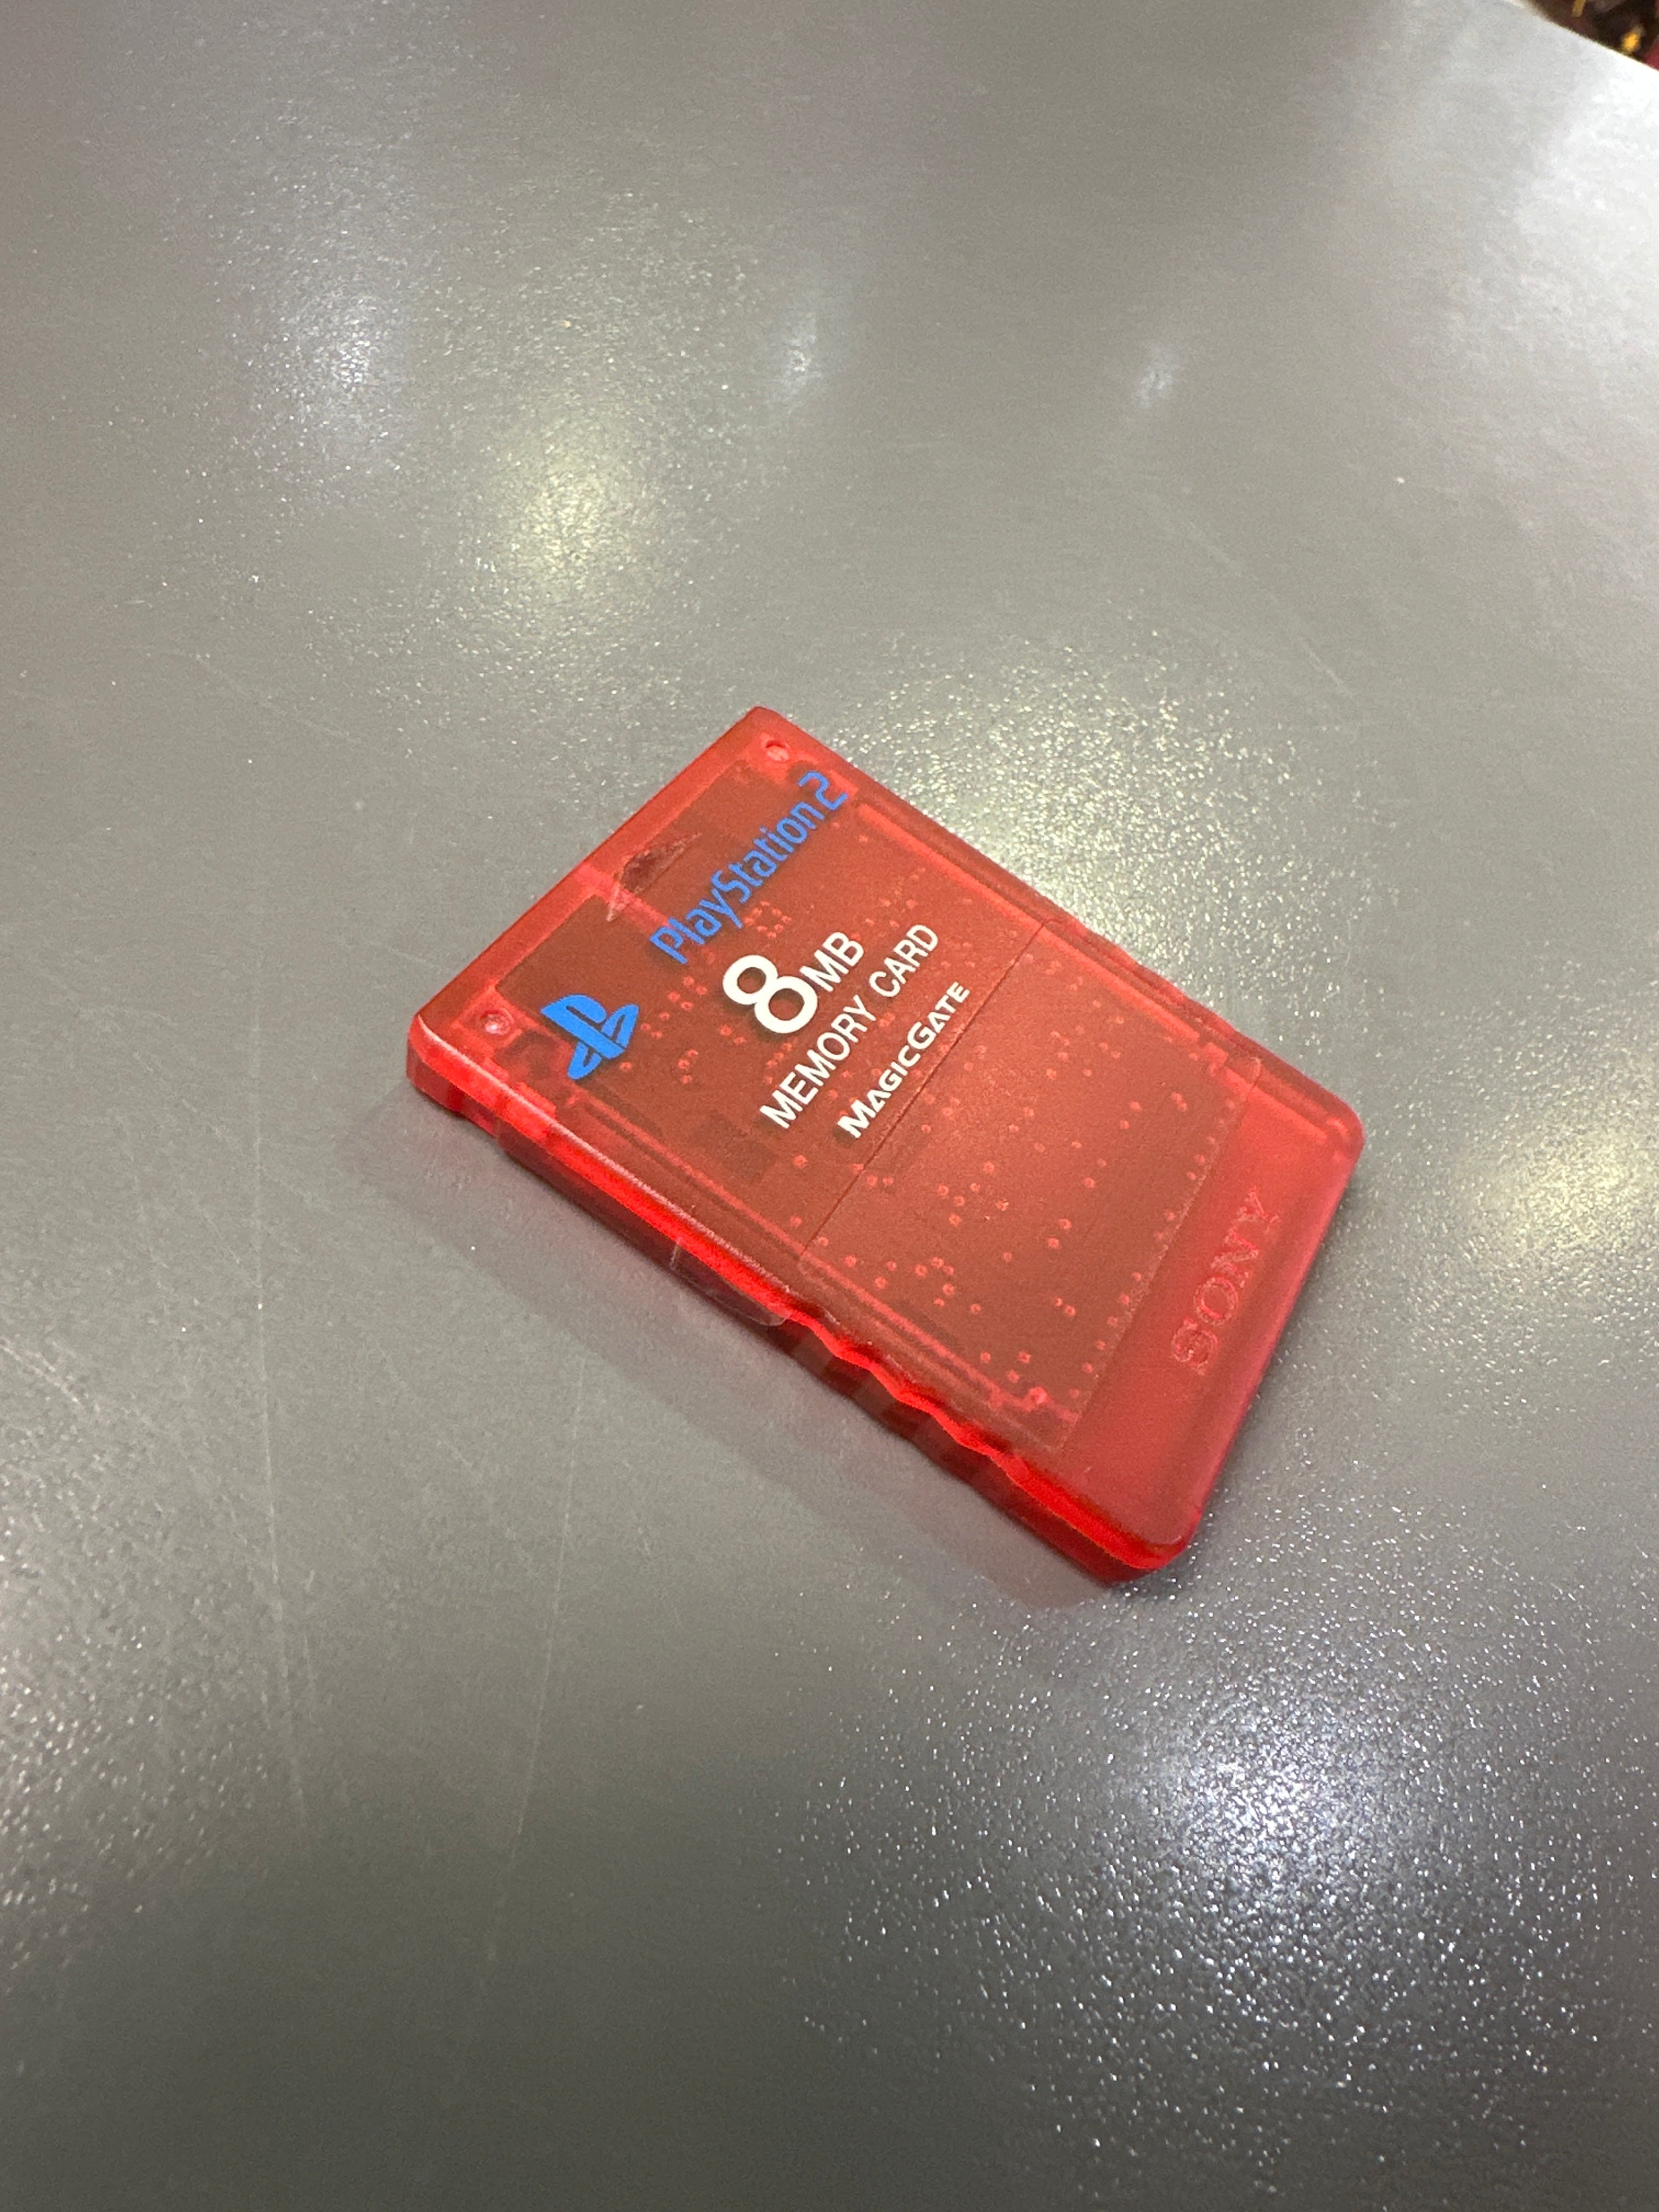 Memory Card rot 8MB Sony [gebraucht]